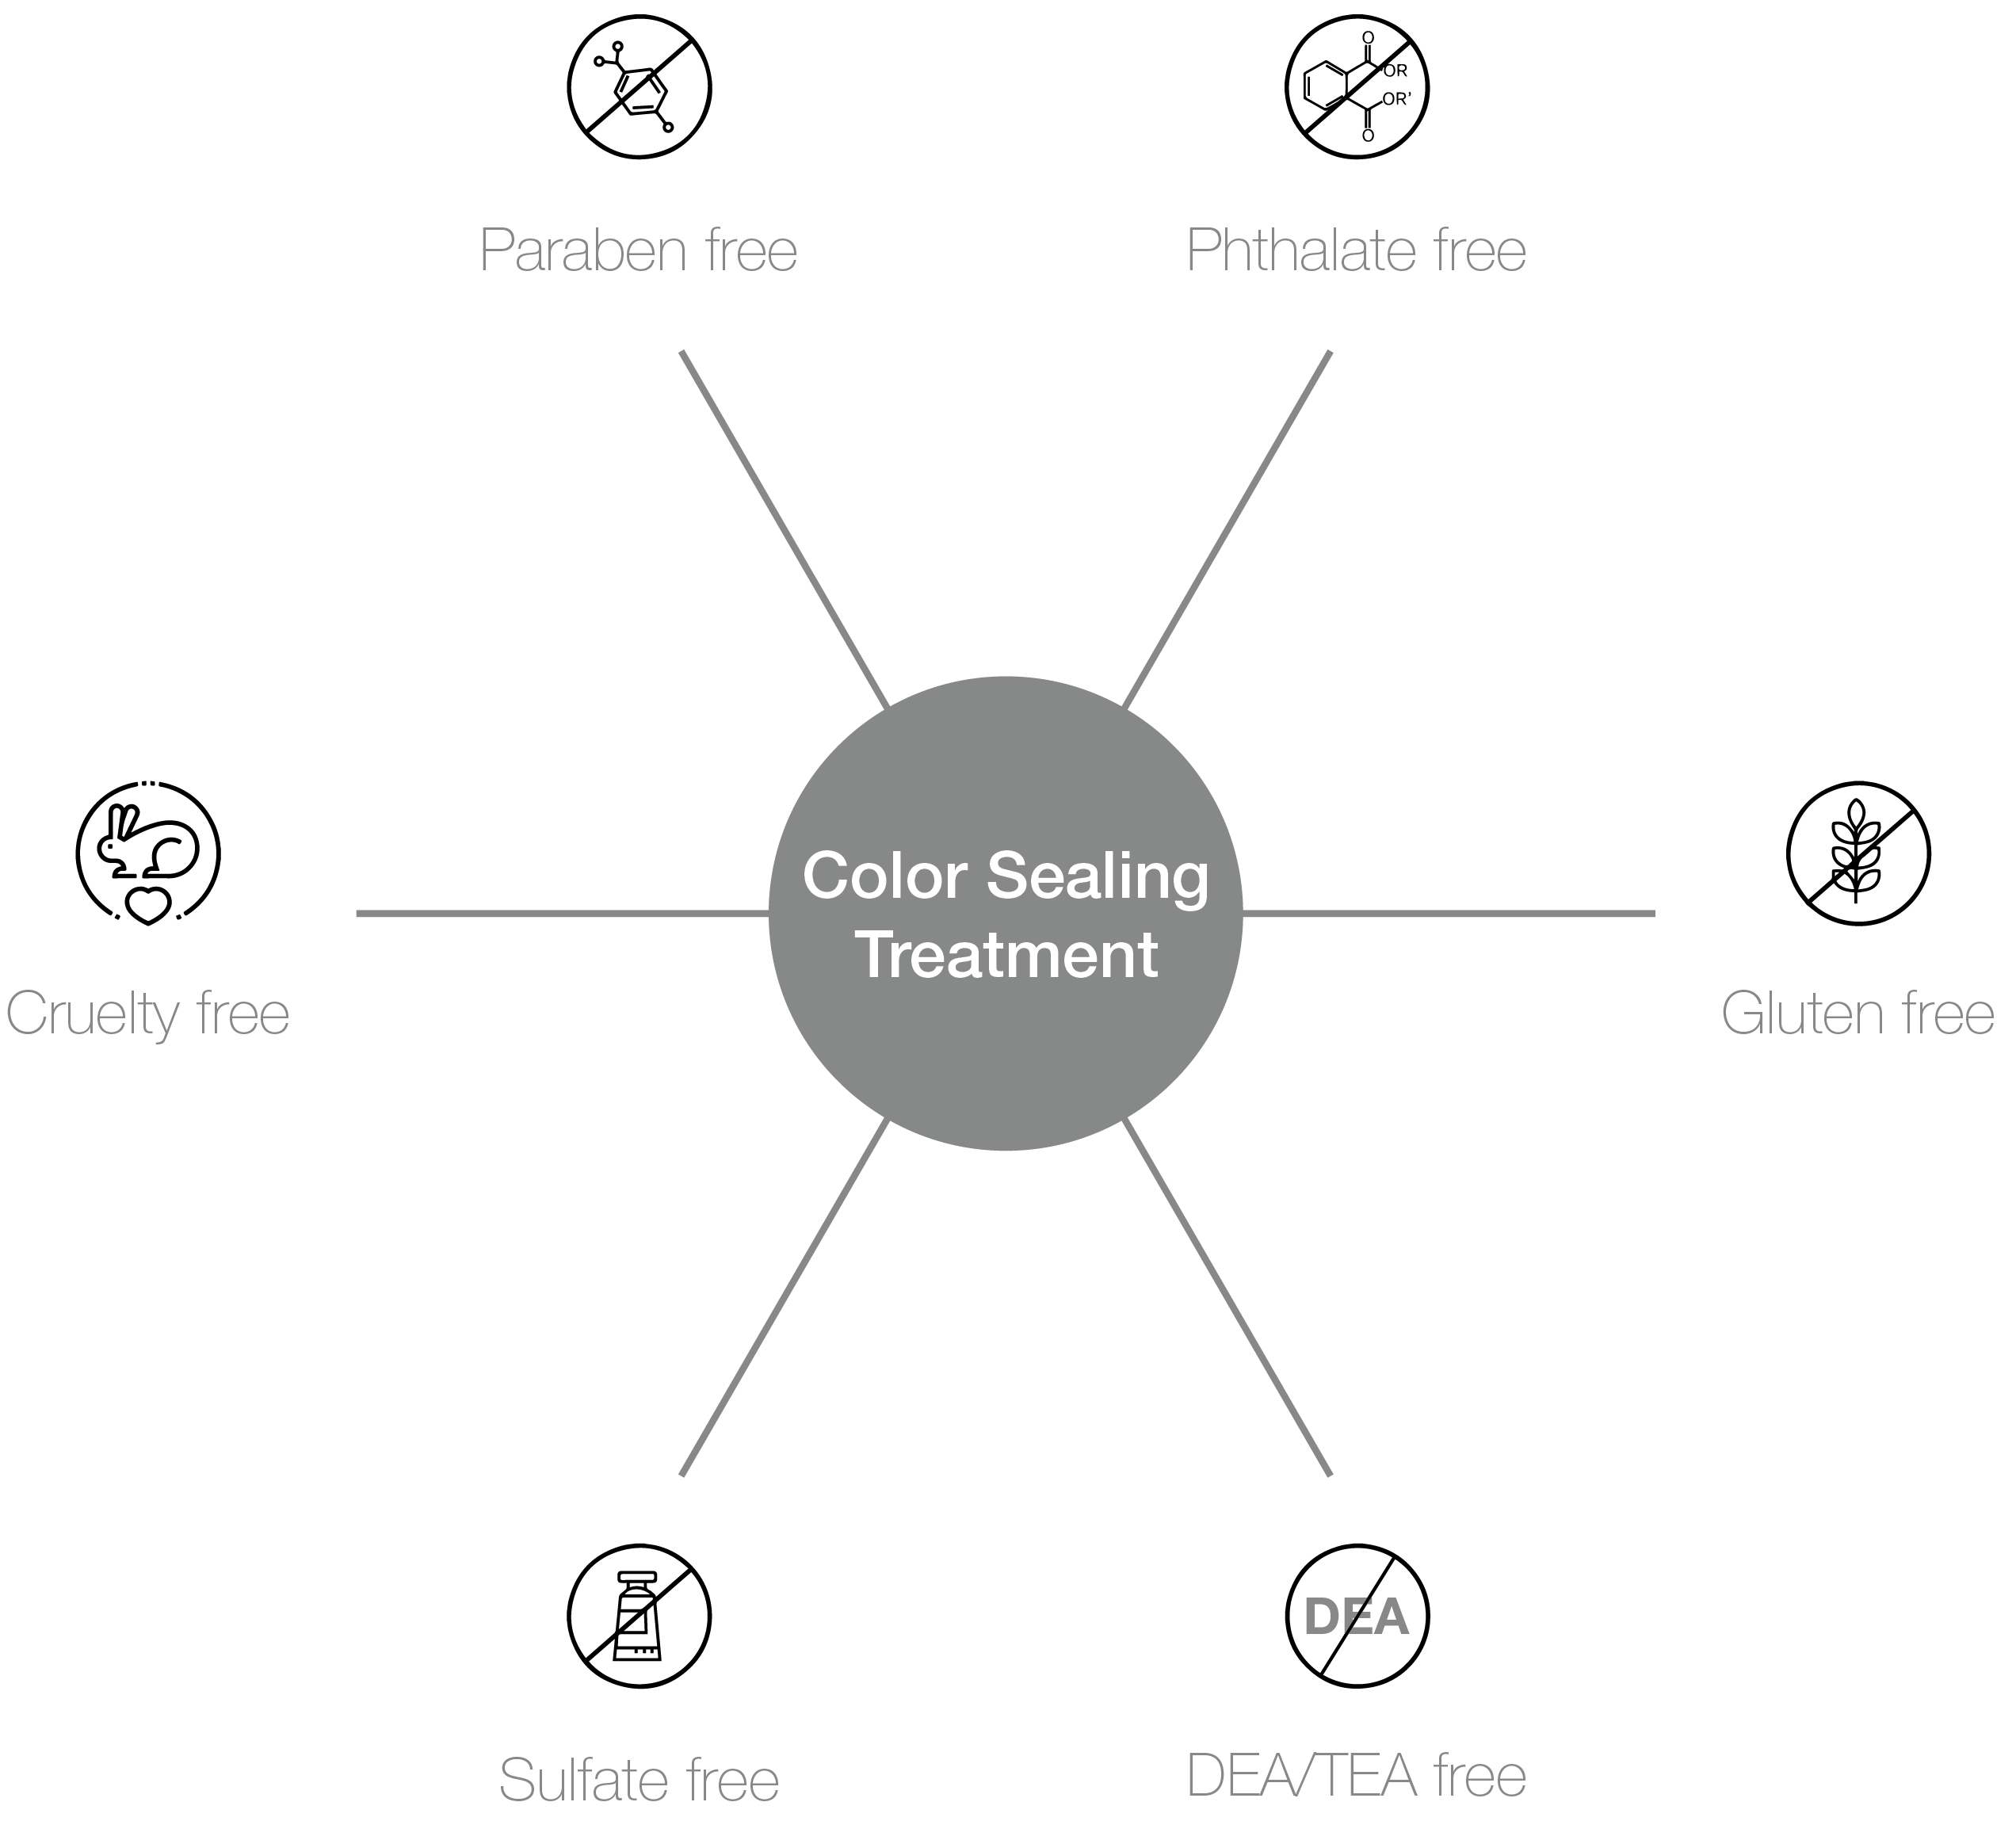 Color Sealing Pro-benefits